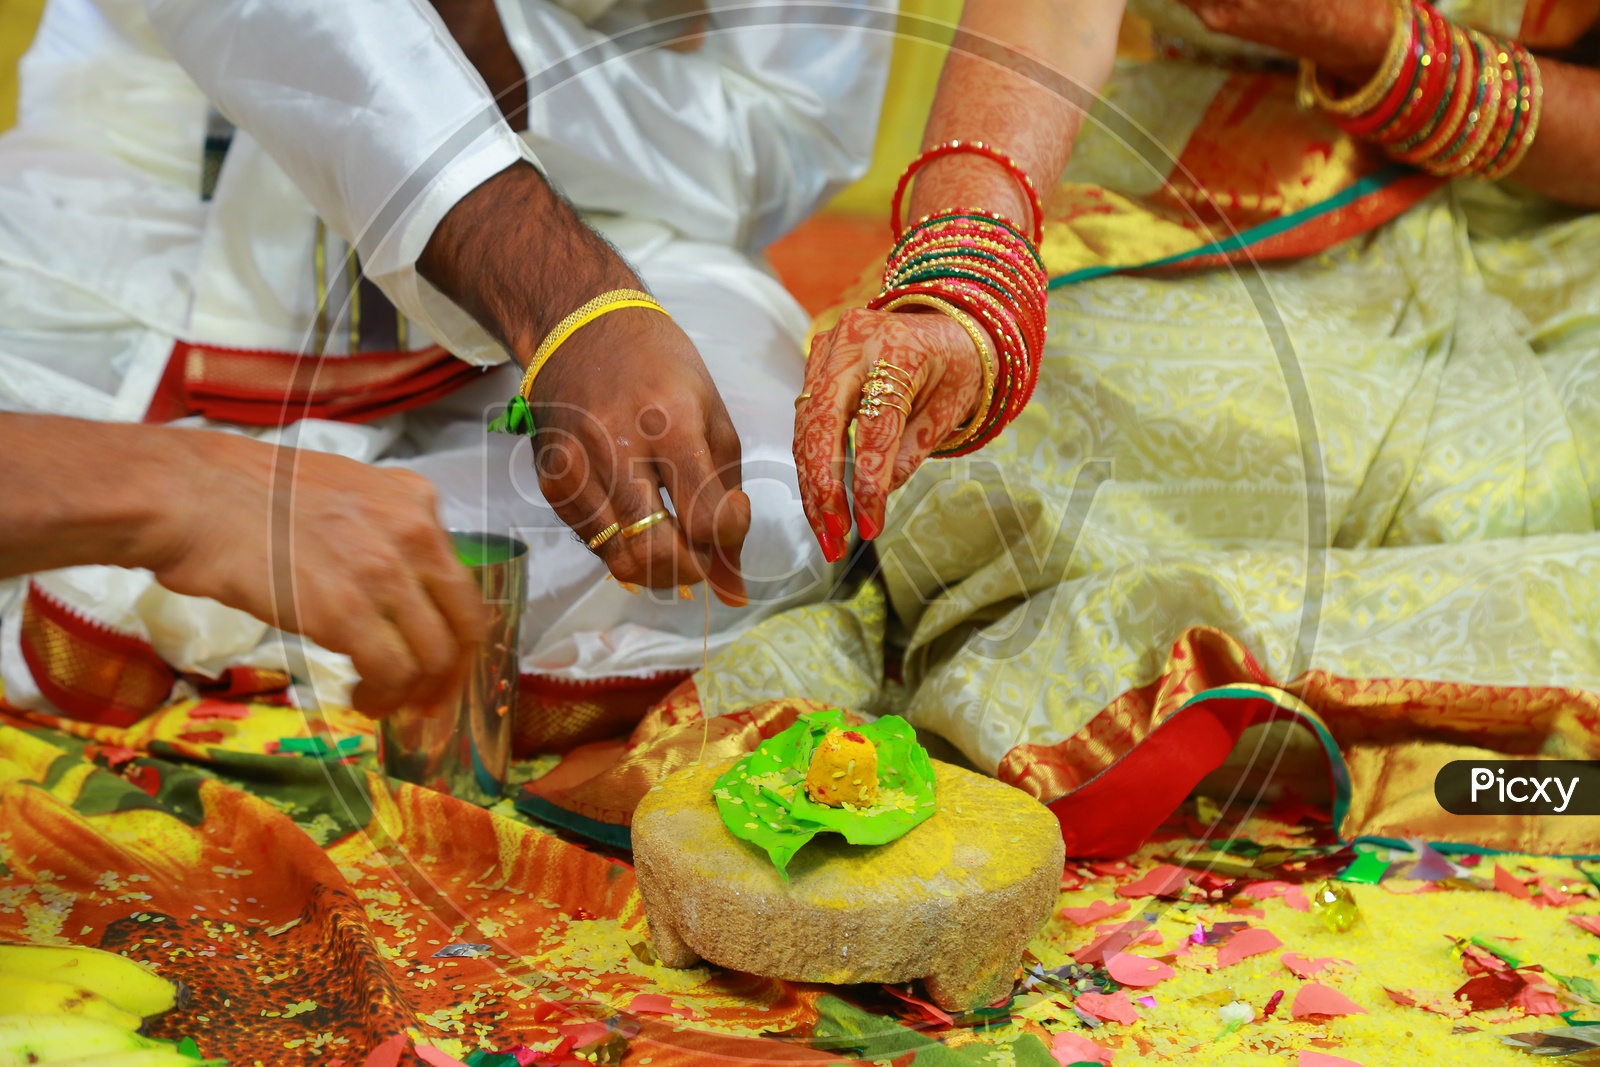 Indian Bride and Bride Groom during Pooja